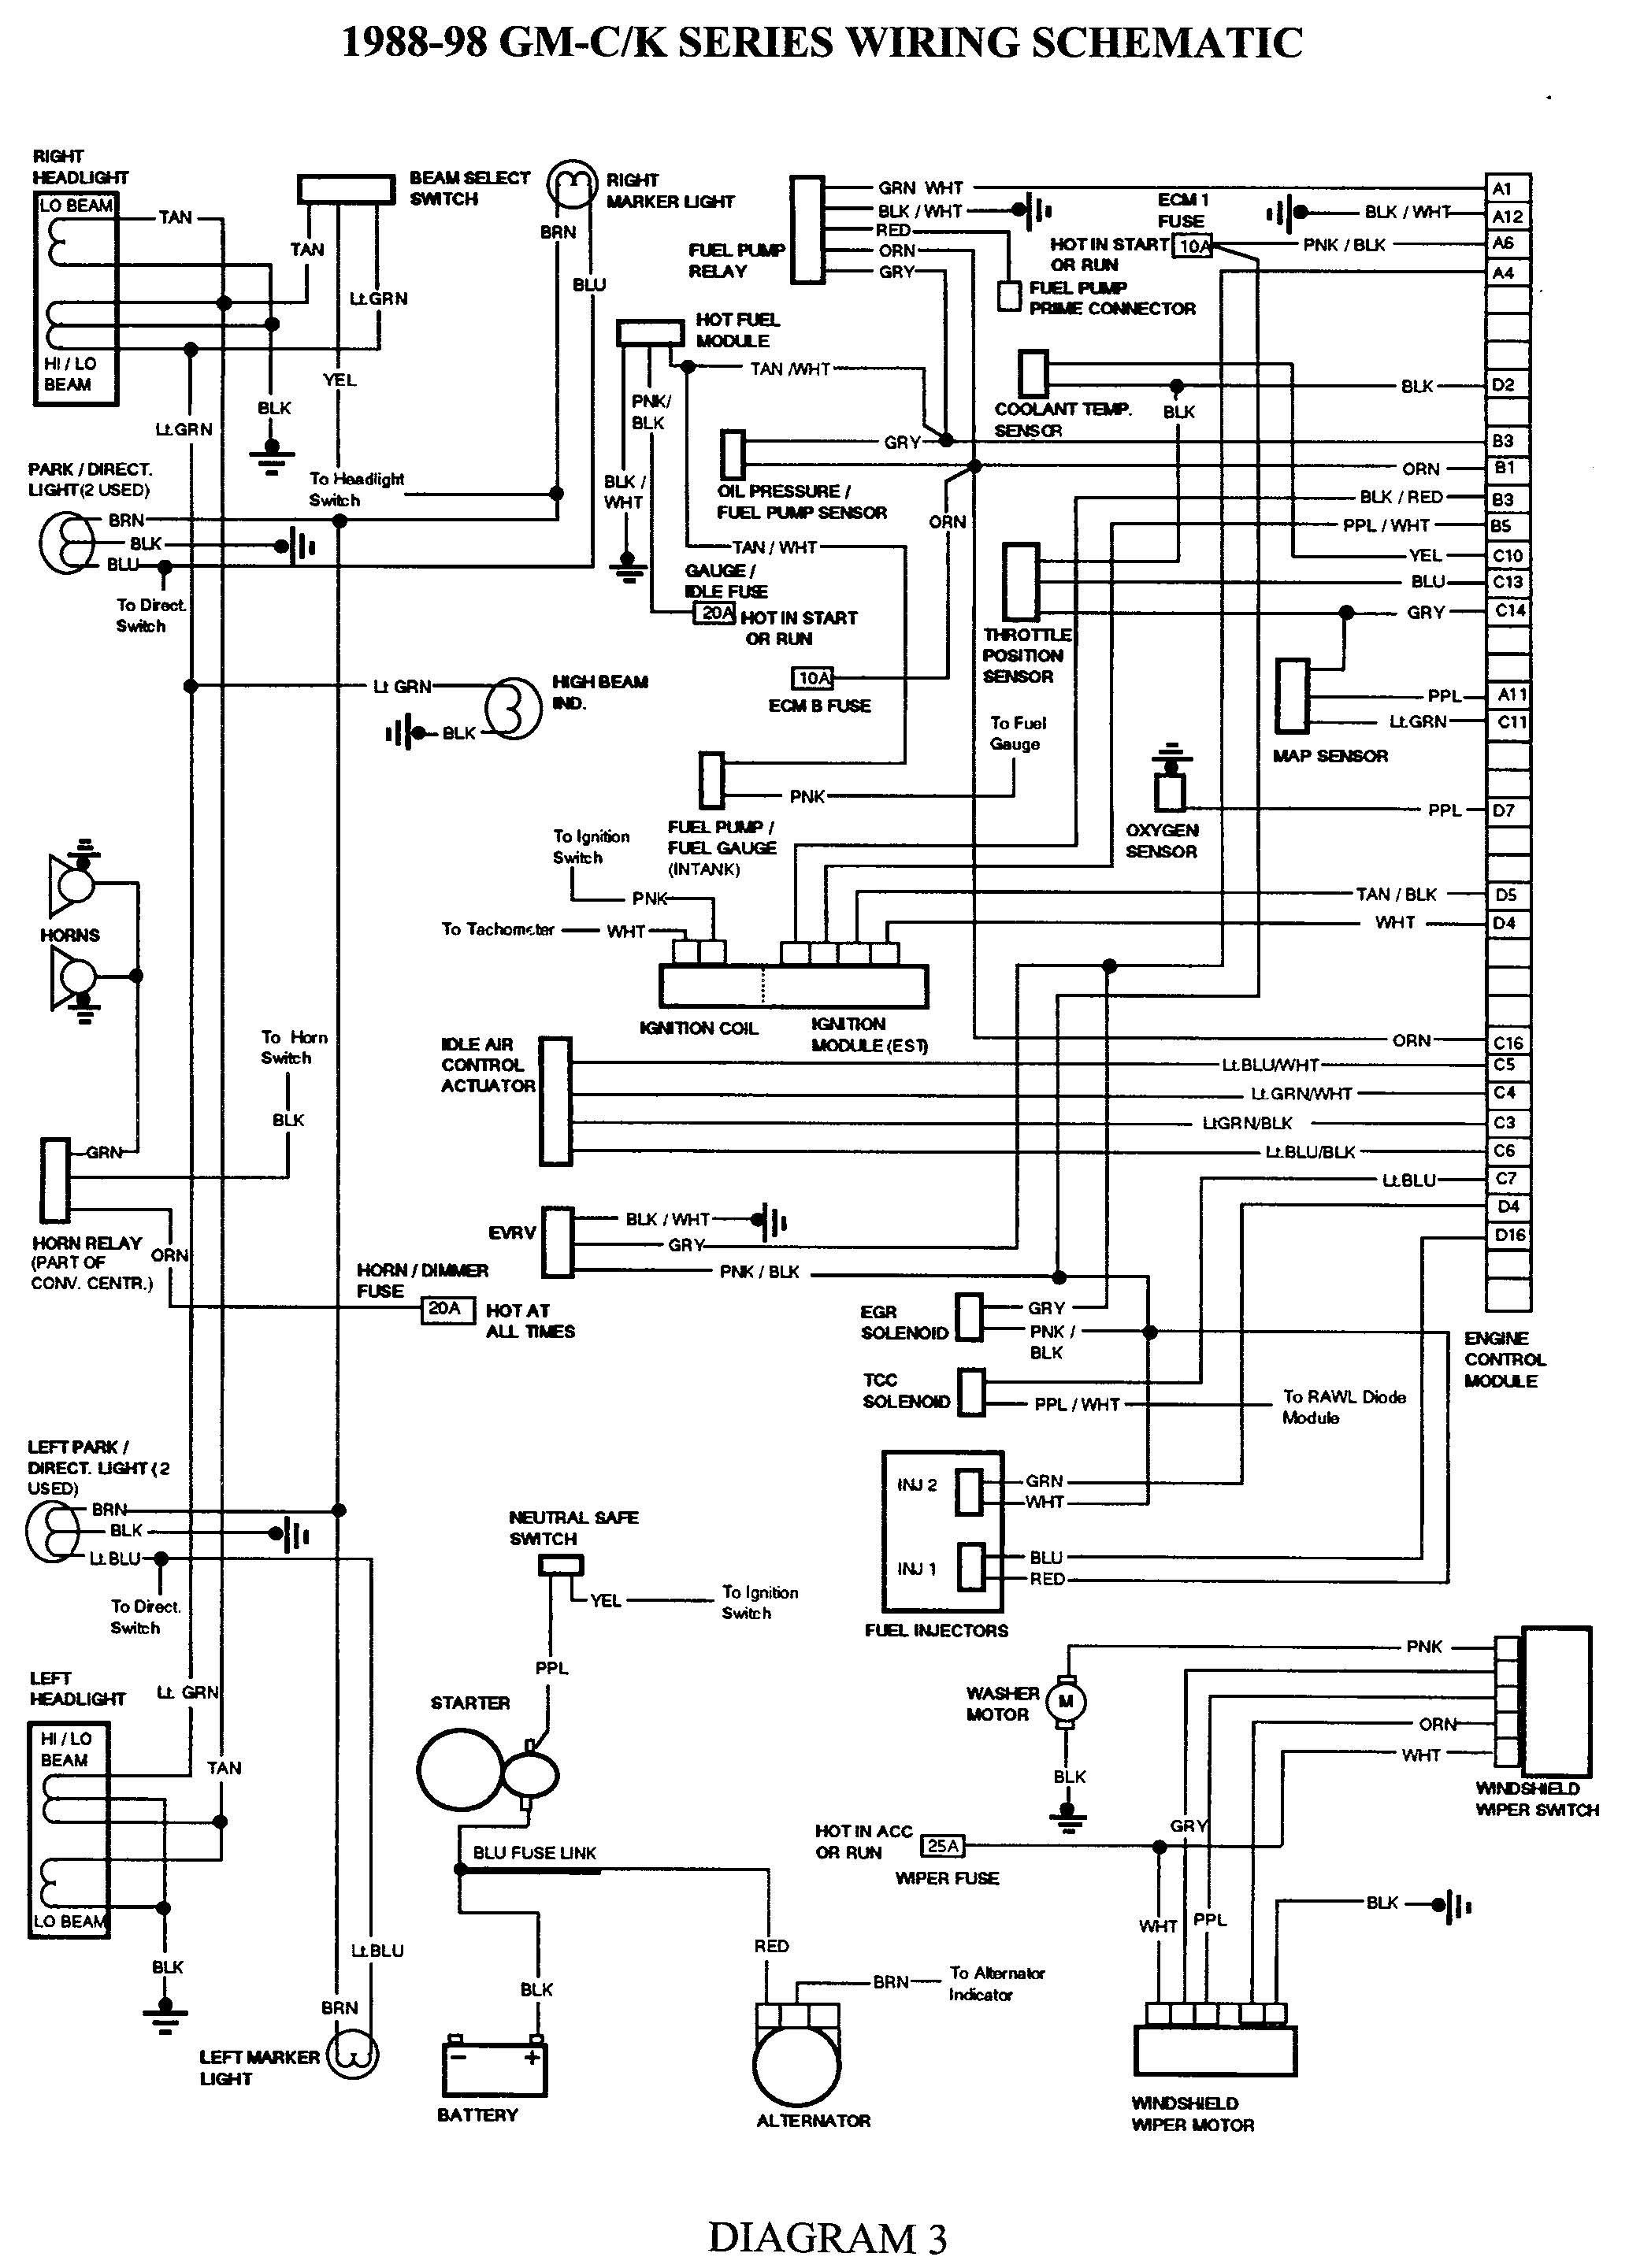 1994 Chevy Truck Fuel Pump Wiring Diagram - Wiring Diagram